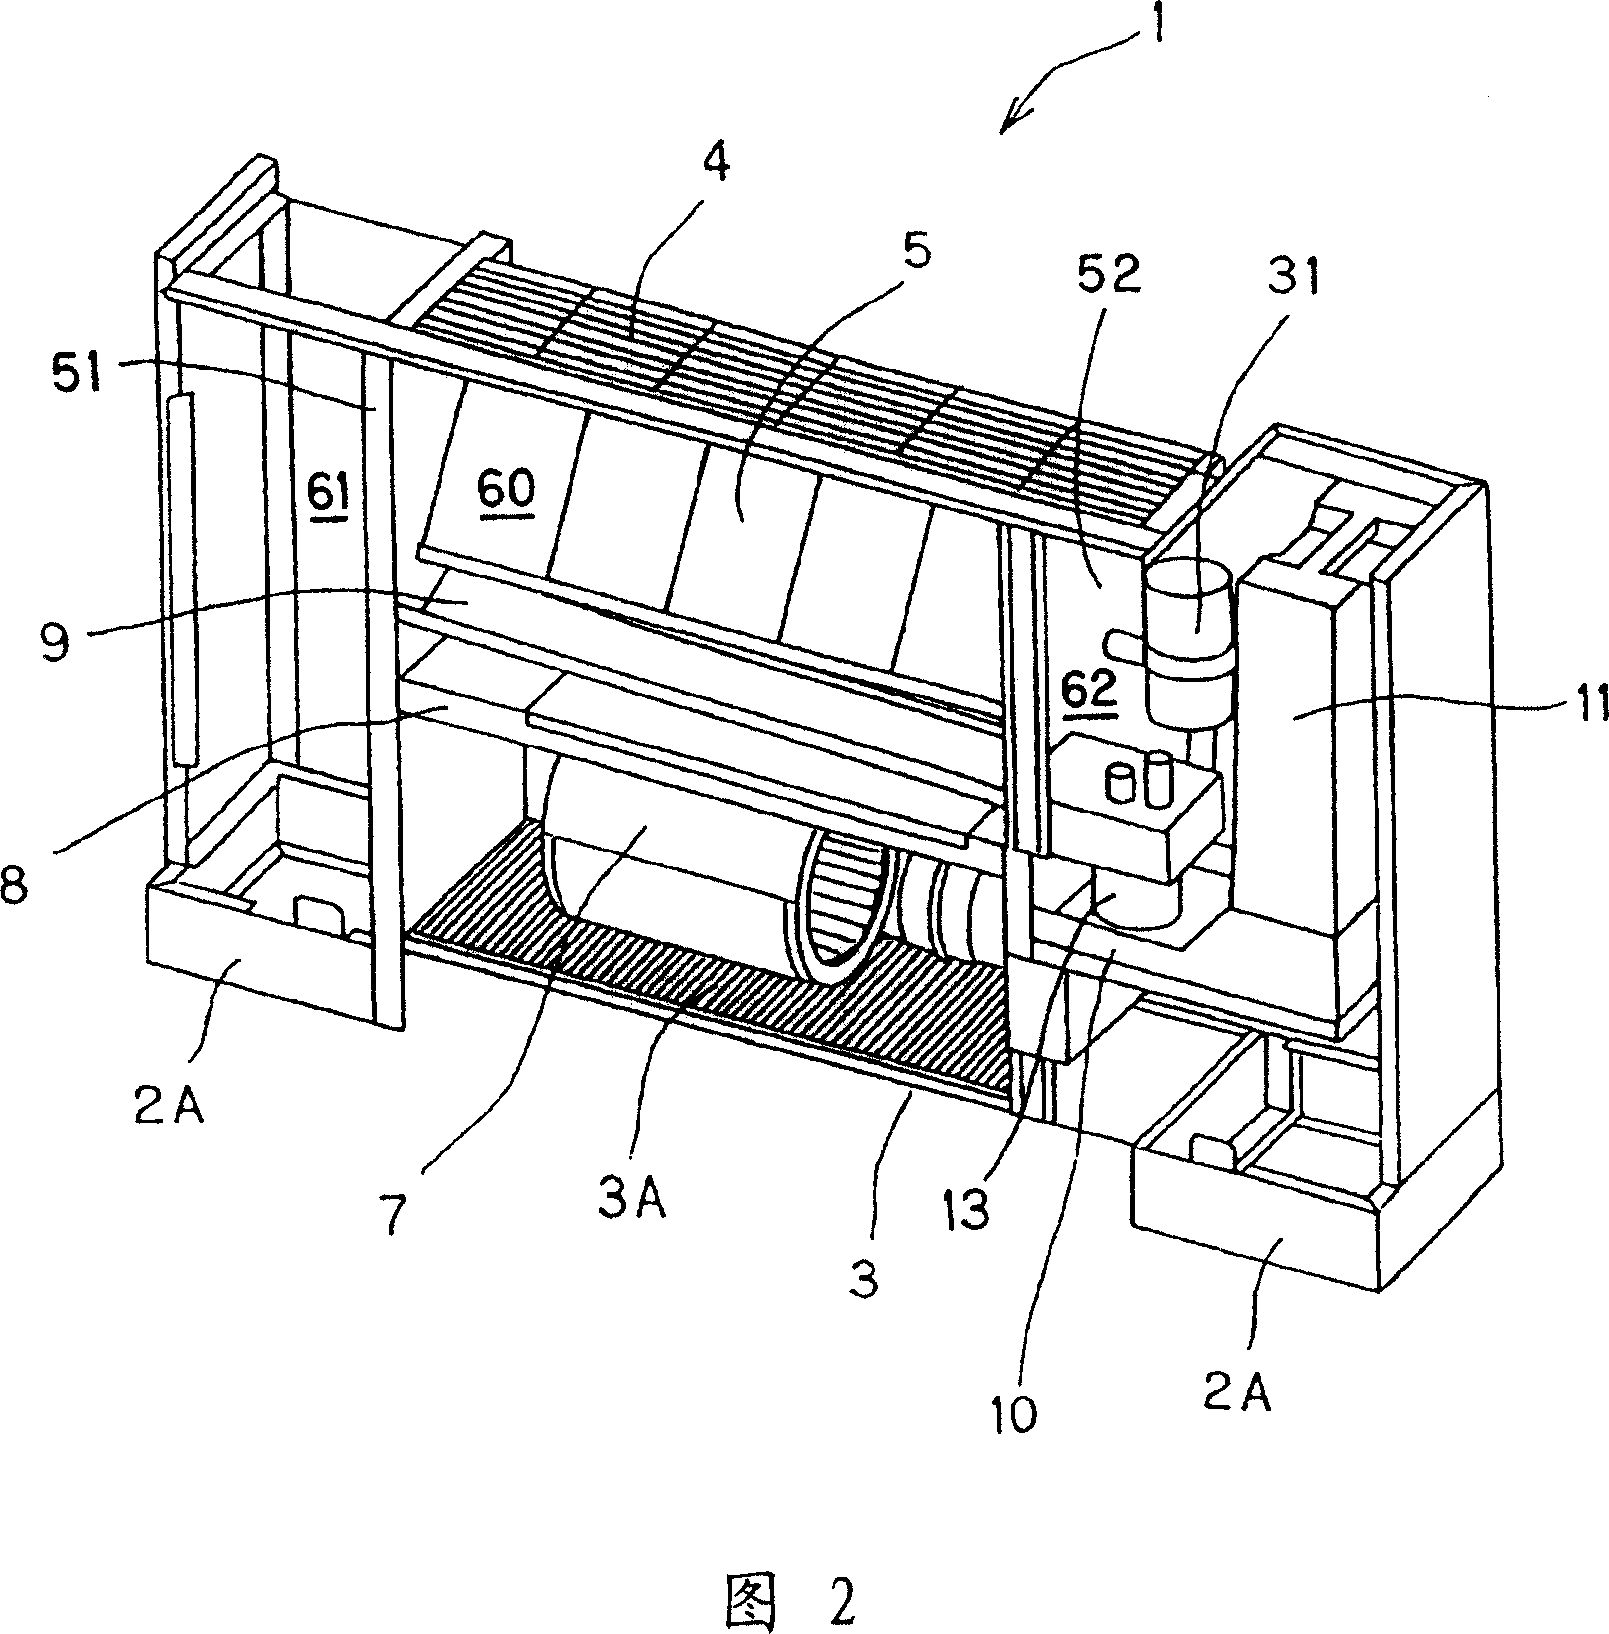 Air filtering apparatus